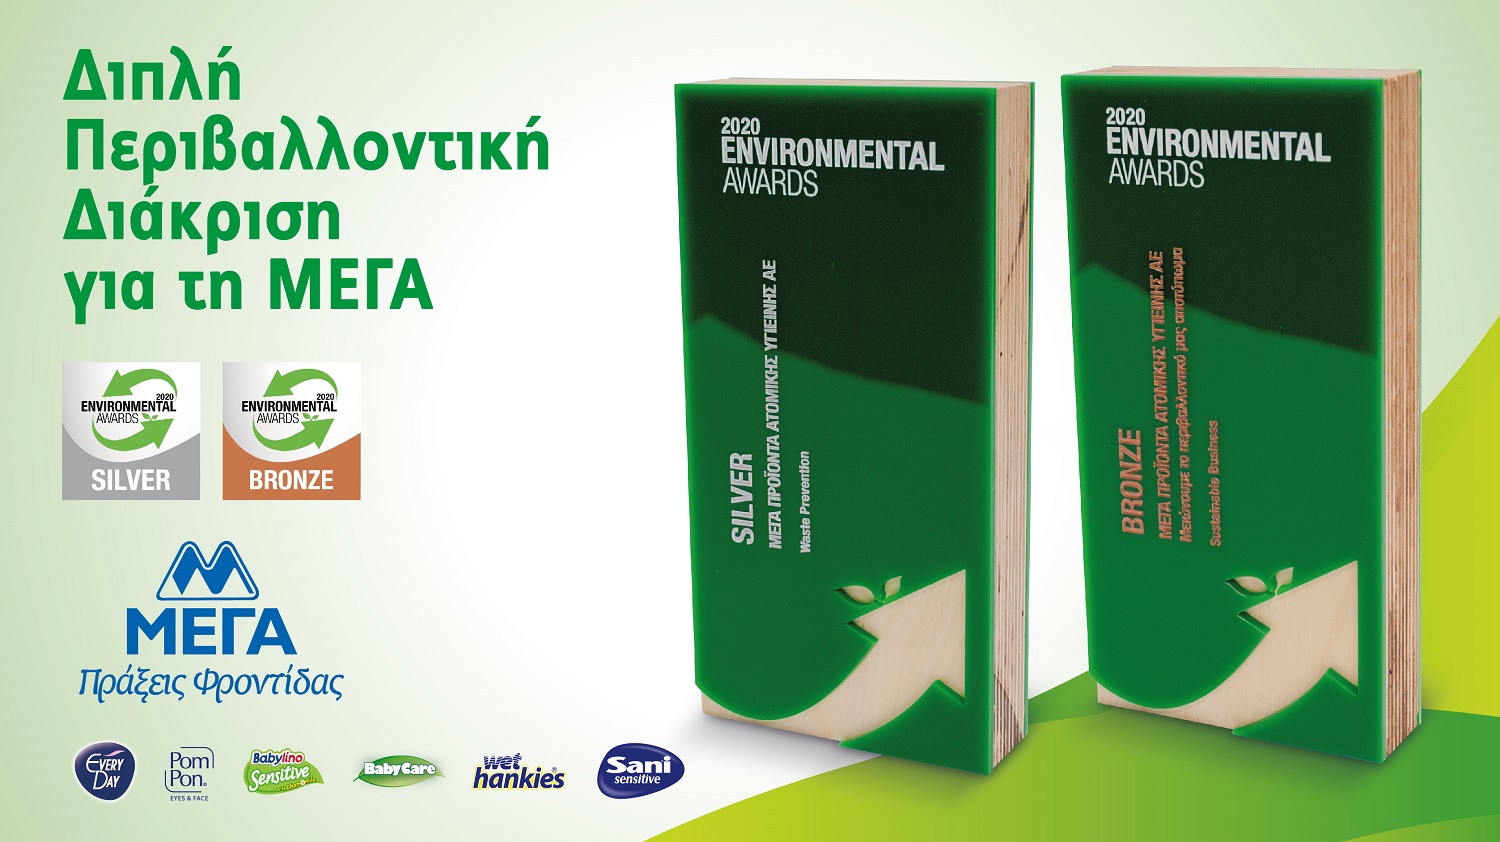 MEGA Environmental Awards KeyVisual